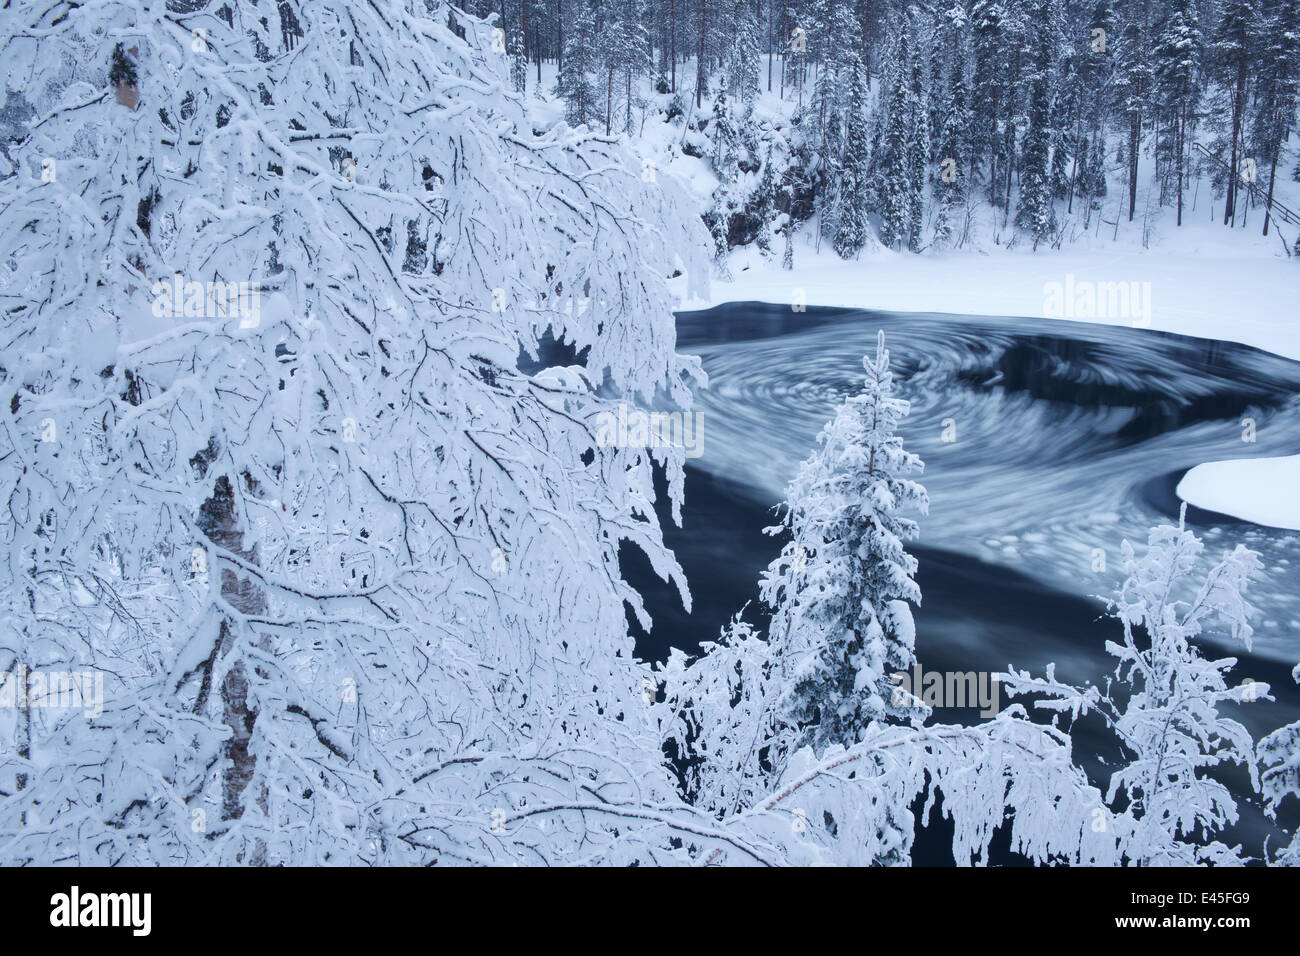 Ice being drawn into whirlpool, Kitkajoki River, Kuusamo, Oulanka National Park, Finland, February 2009 Stock Photo